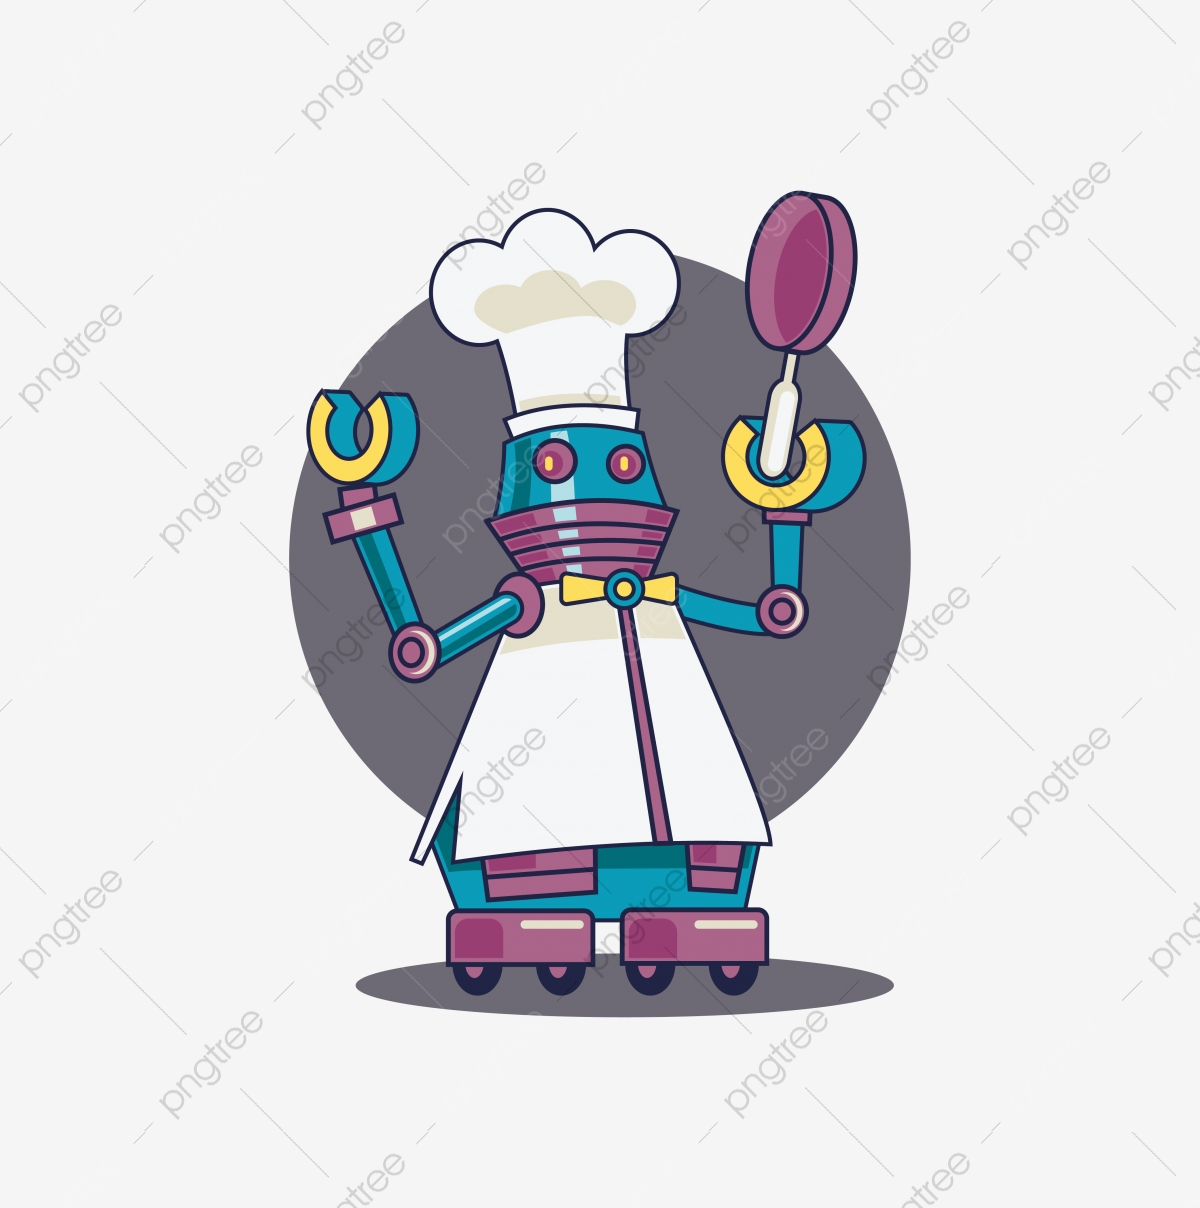 robot clipart chef